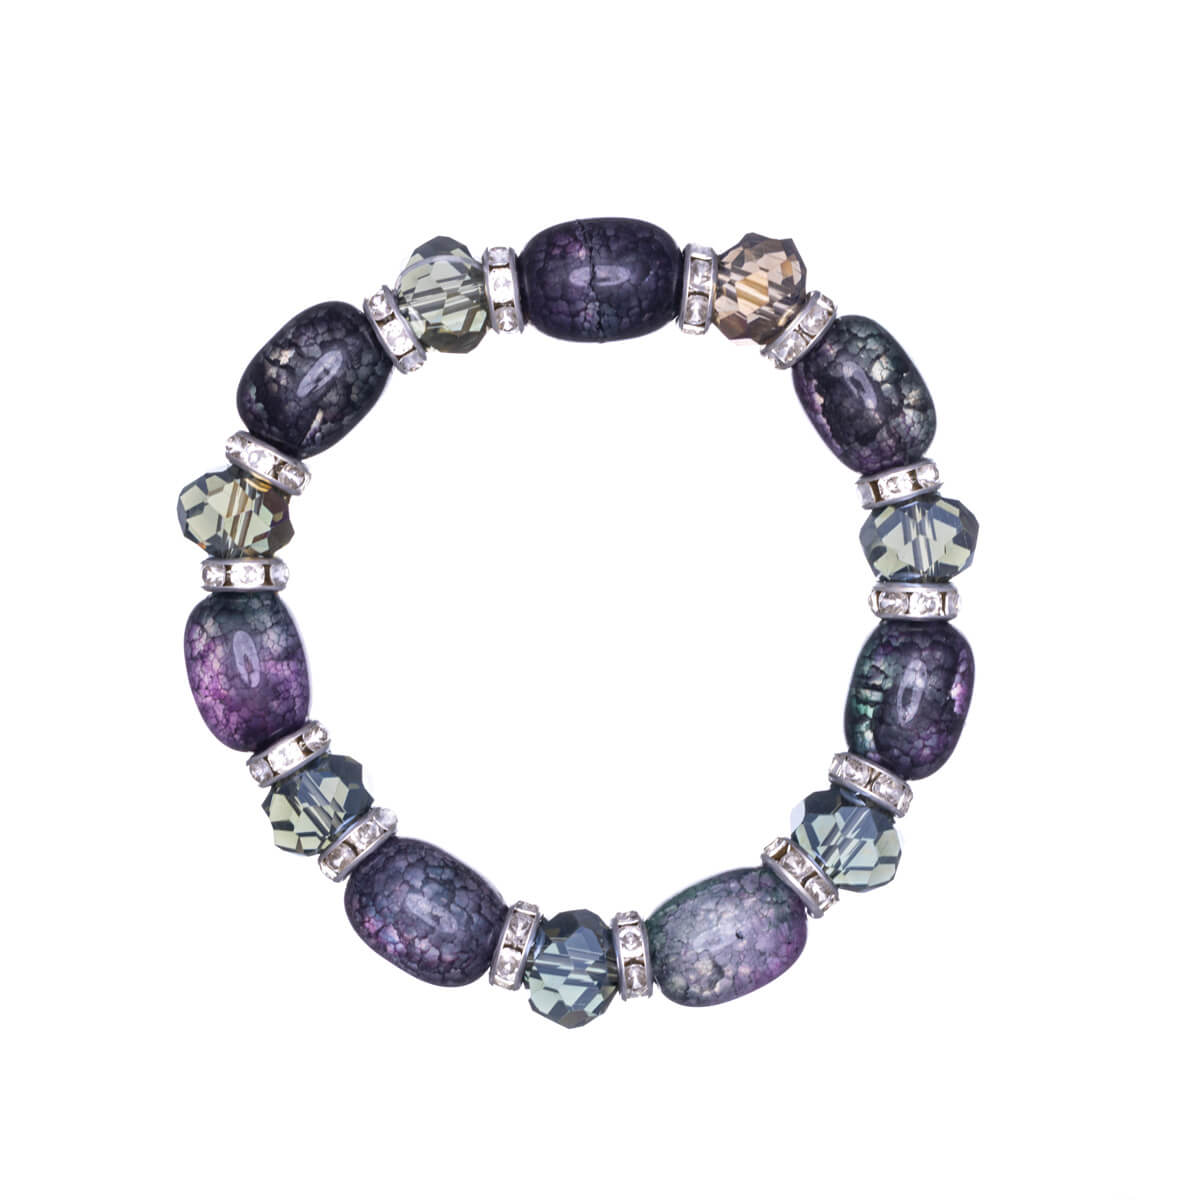 Elastic bracelet with stones and beveled glass stones